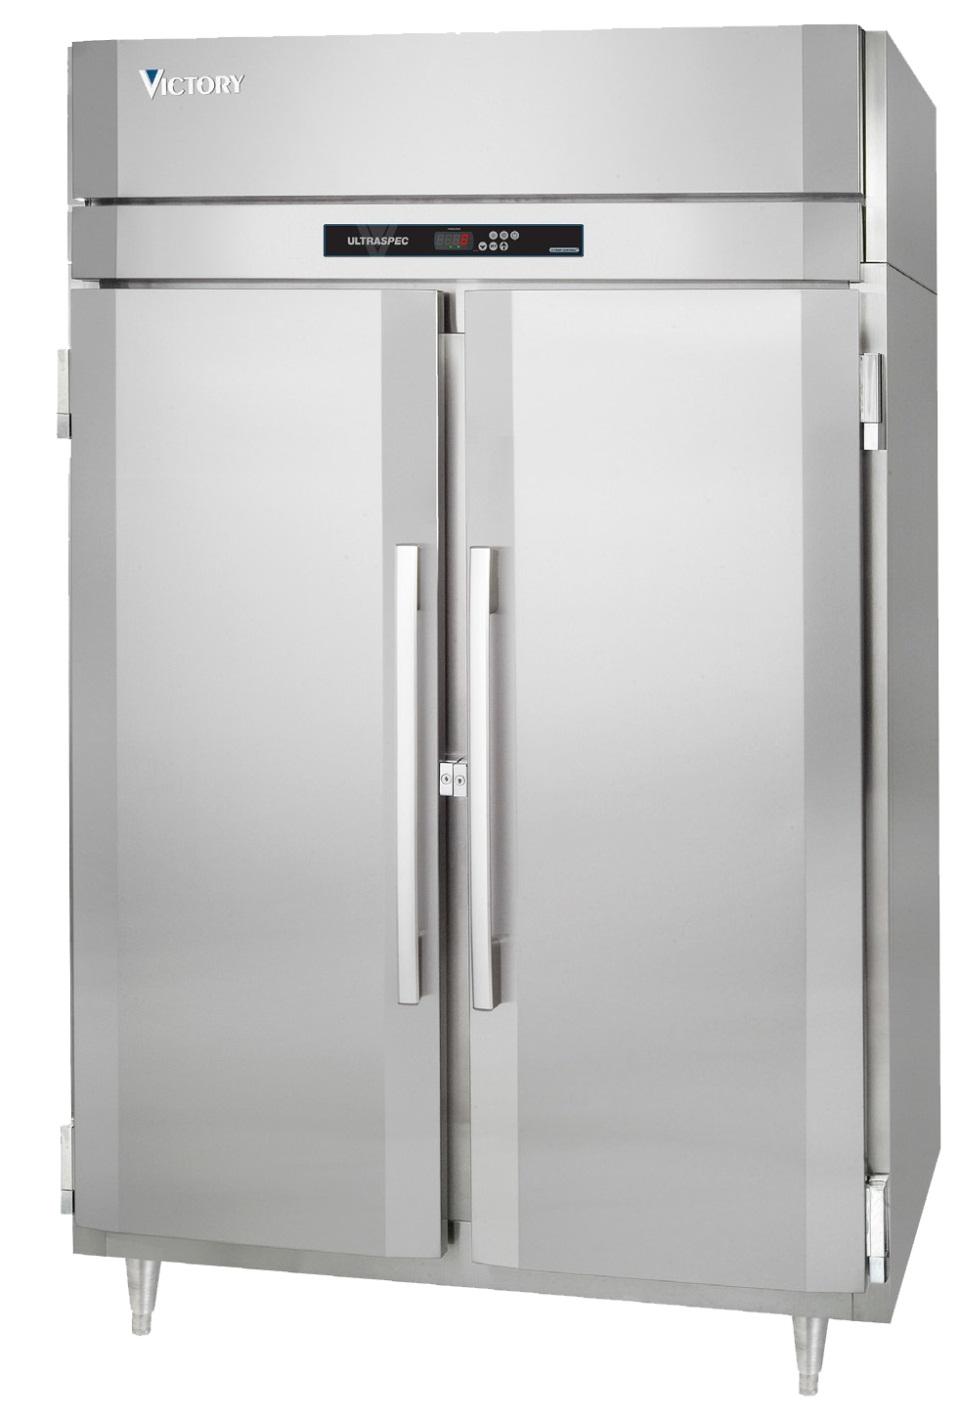 Kitchen Opportunities Refrigerators and Freezers Equipment Type Size Incentive < 15 cu ft $75.00 Refrigerators 15 30 cu ft $100.